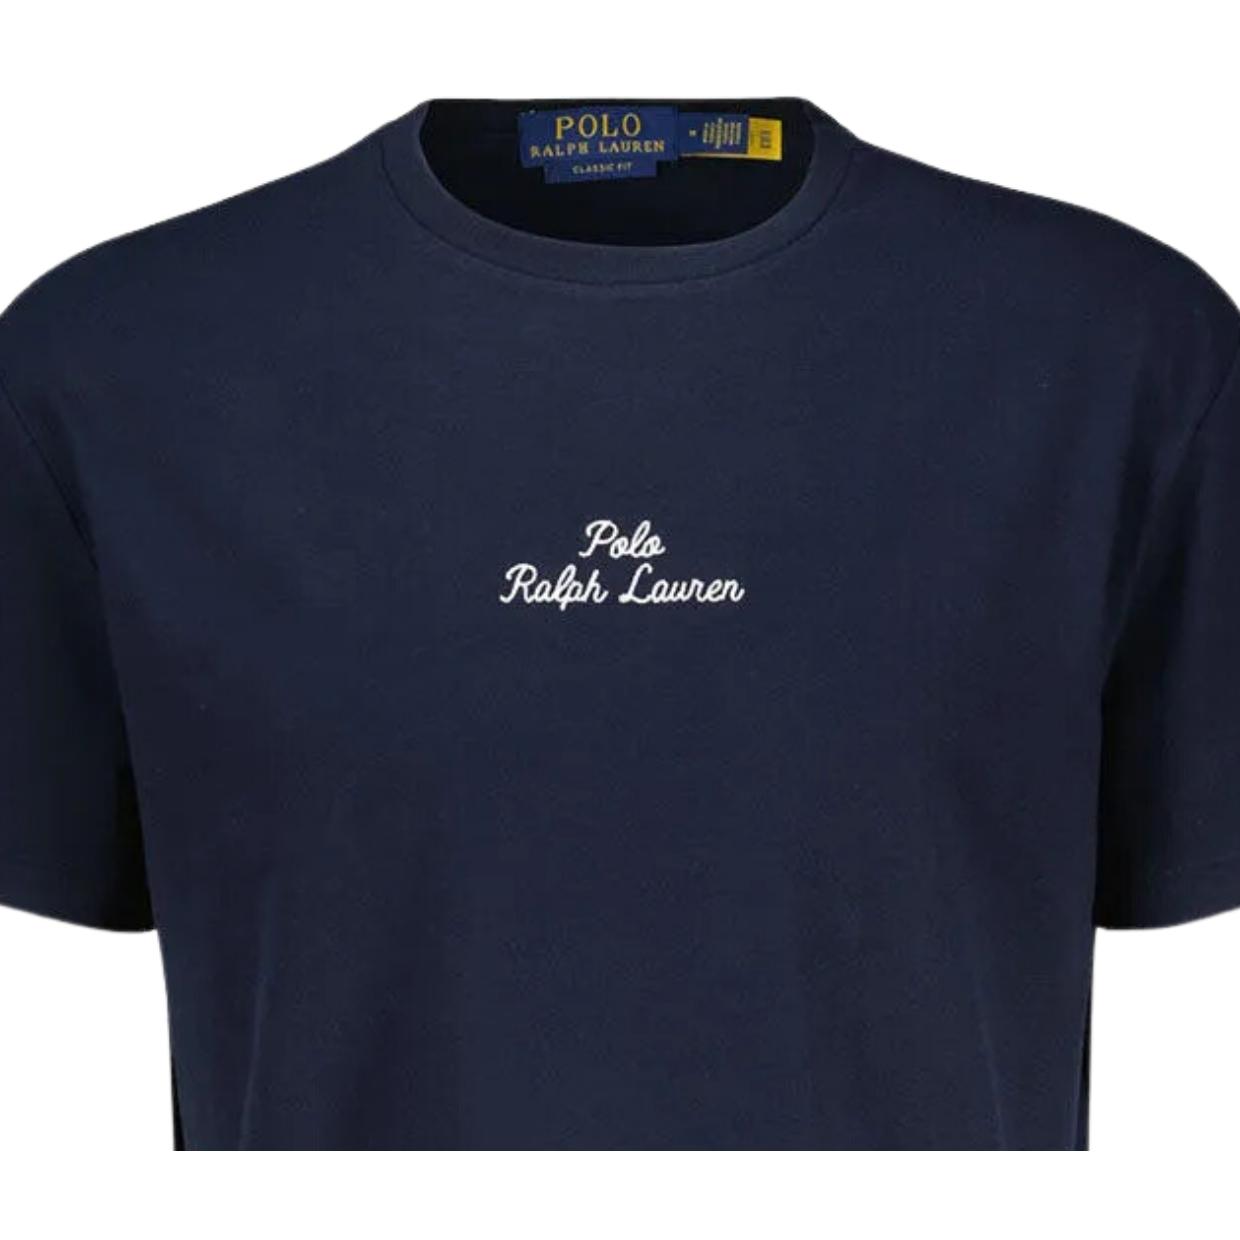 Polo Ralph Lauren Embroidered Logo Dark Navy T-Shirt